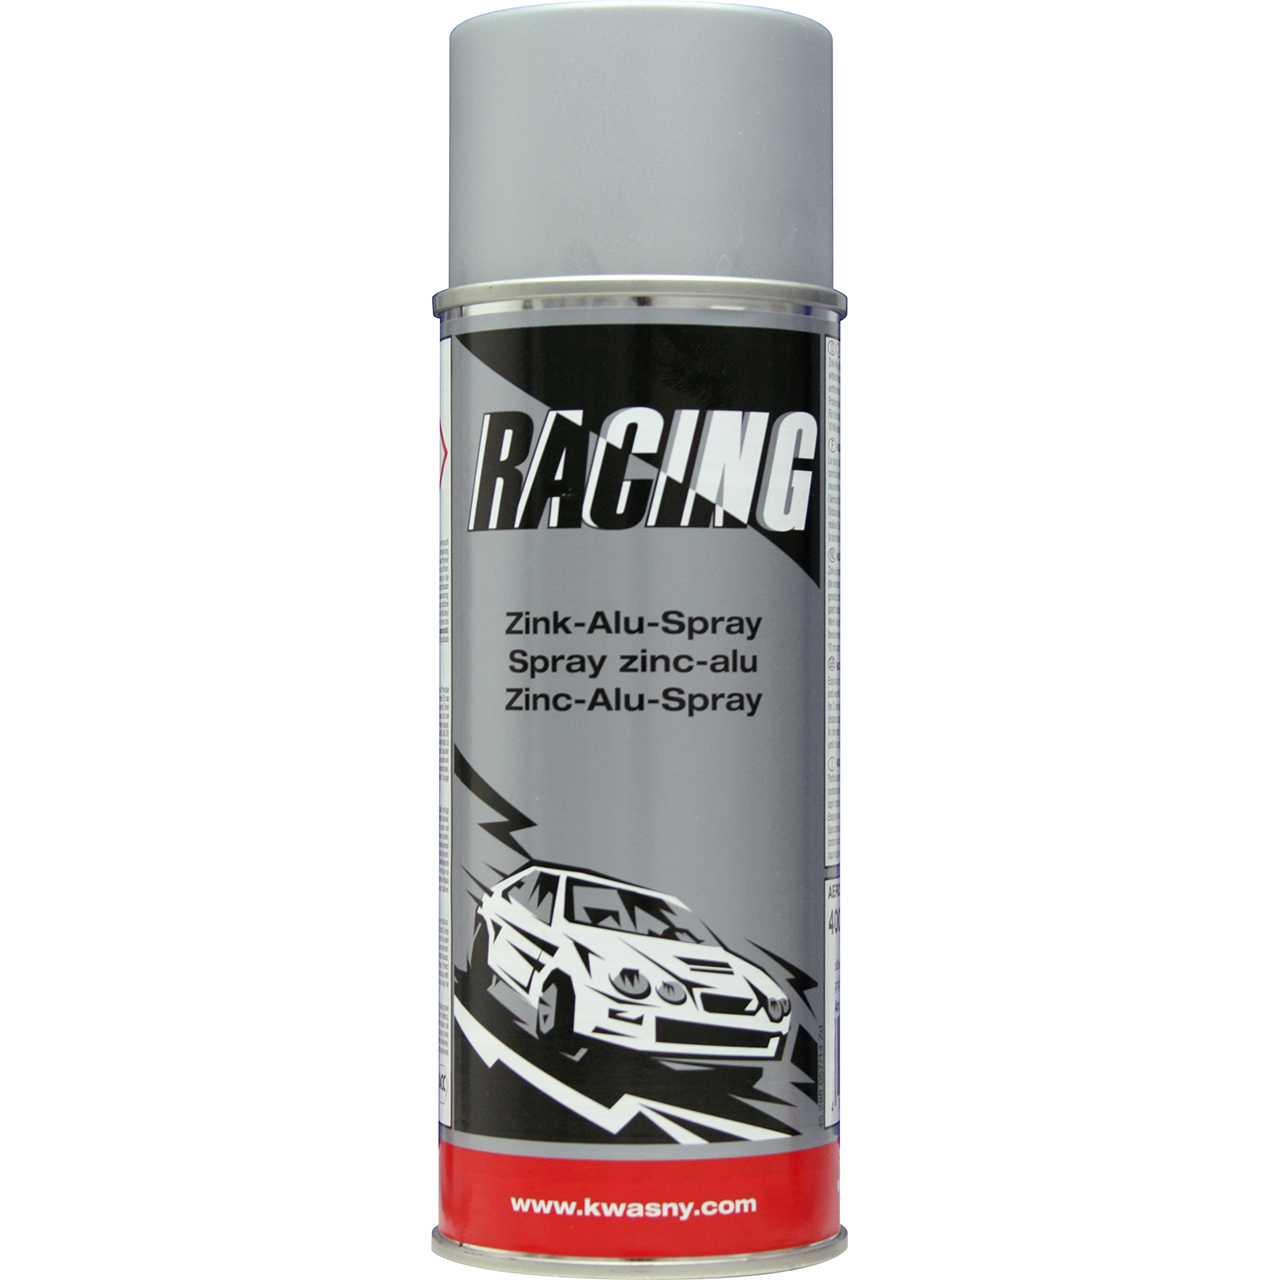 RACING Zink-Alu-Spray 400ml